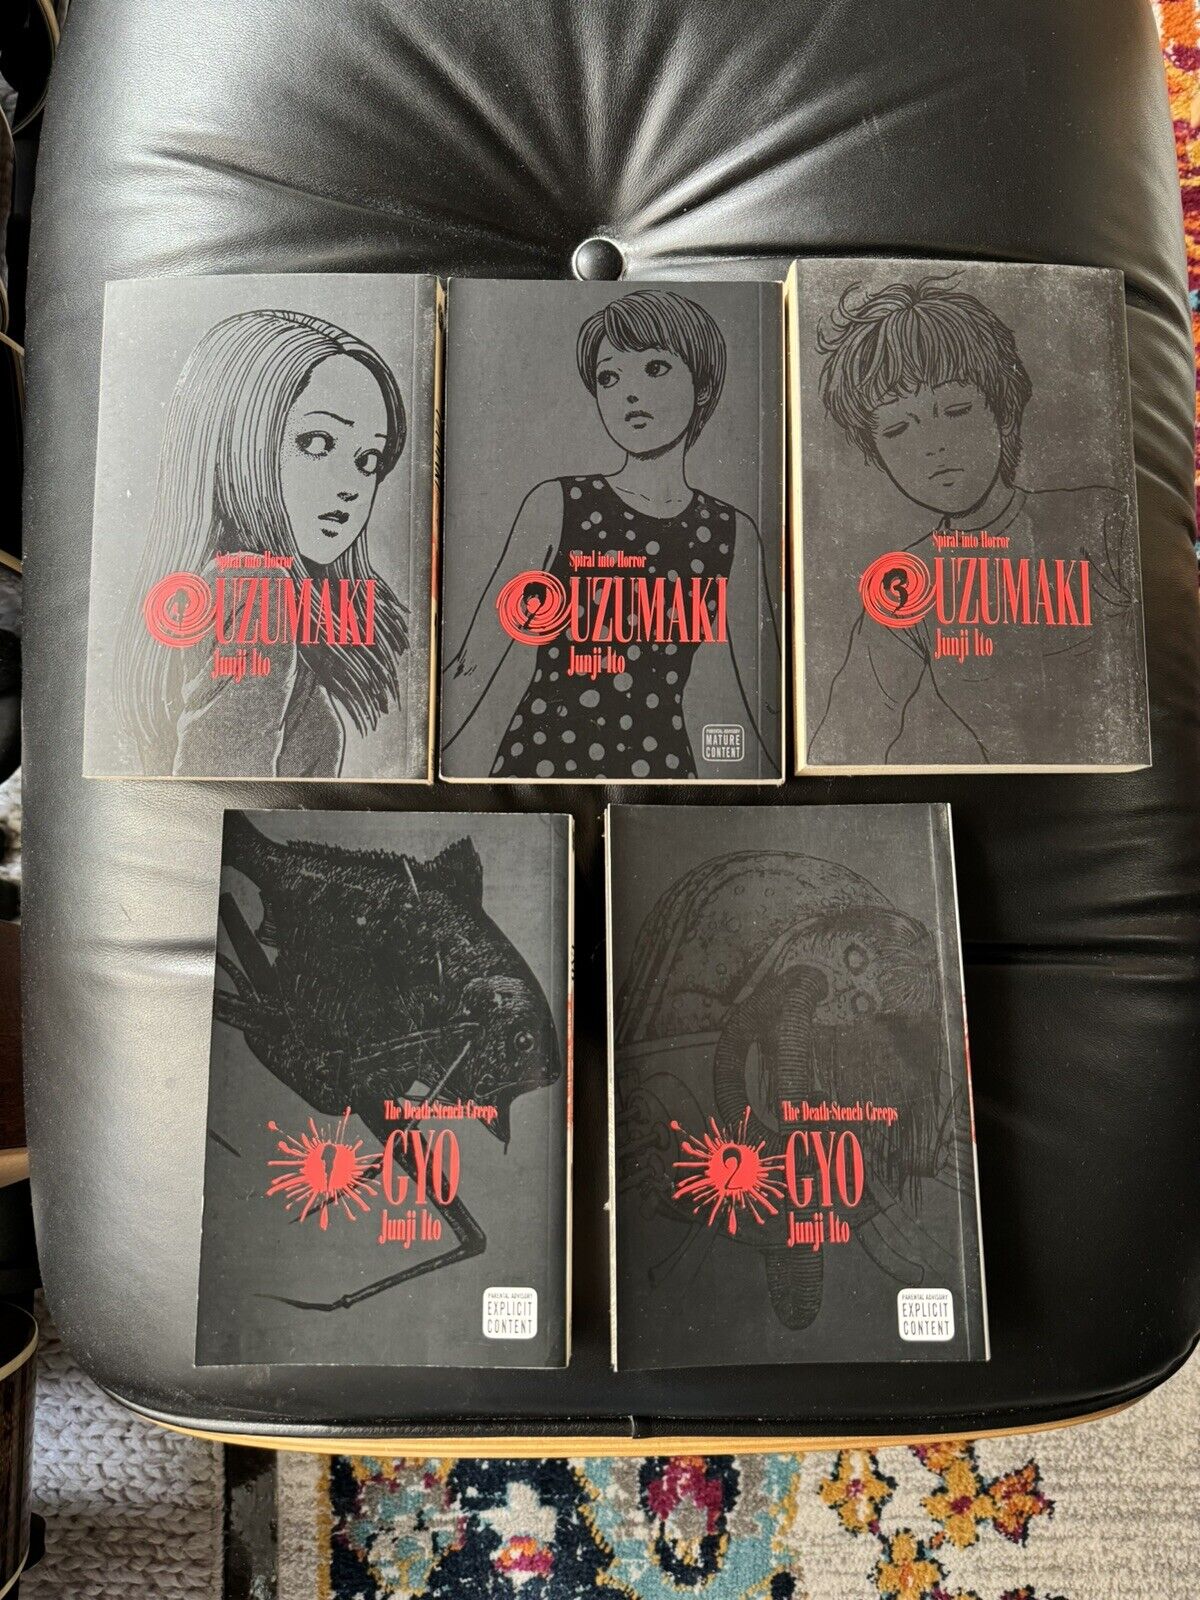 Uzumaki Gyo Junji Ito LOT OF 5 BOOKS - Manga Graphic Novel Anime Horror Comic